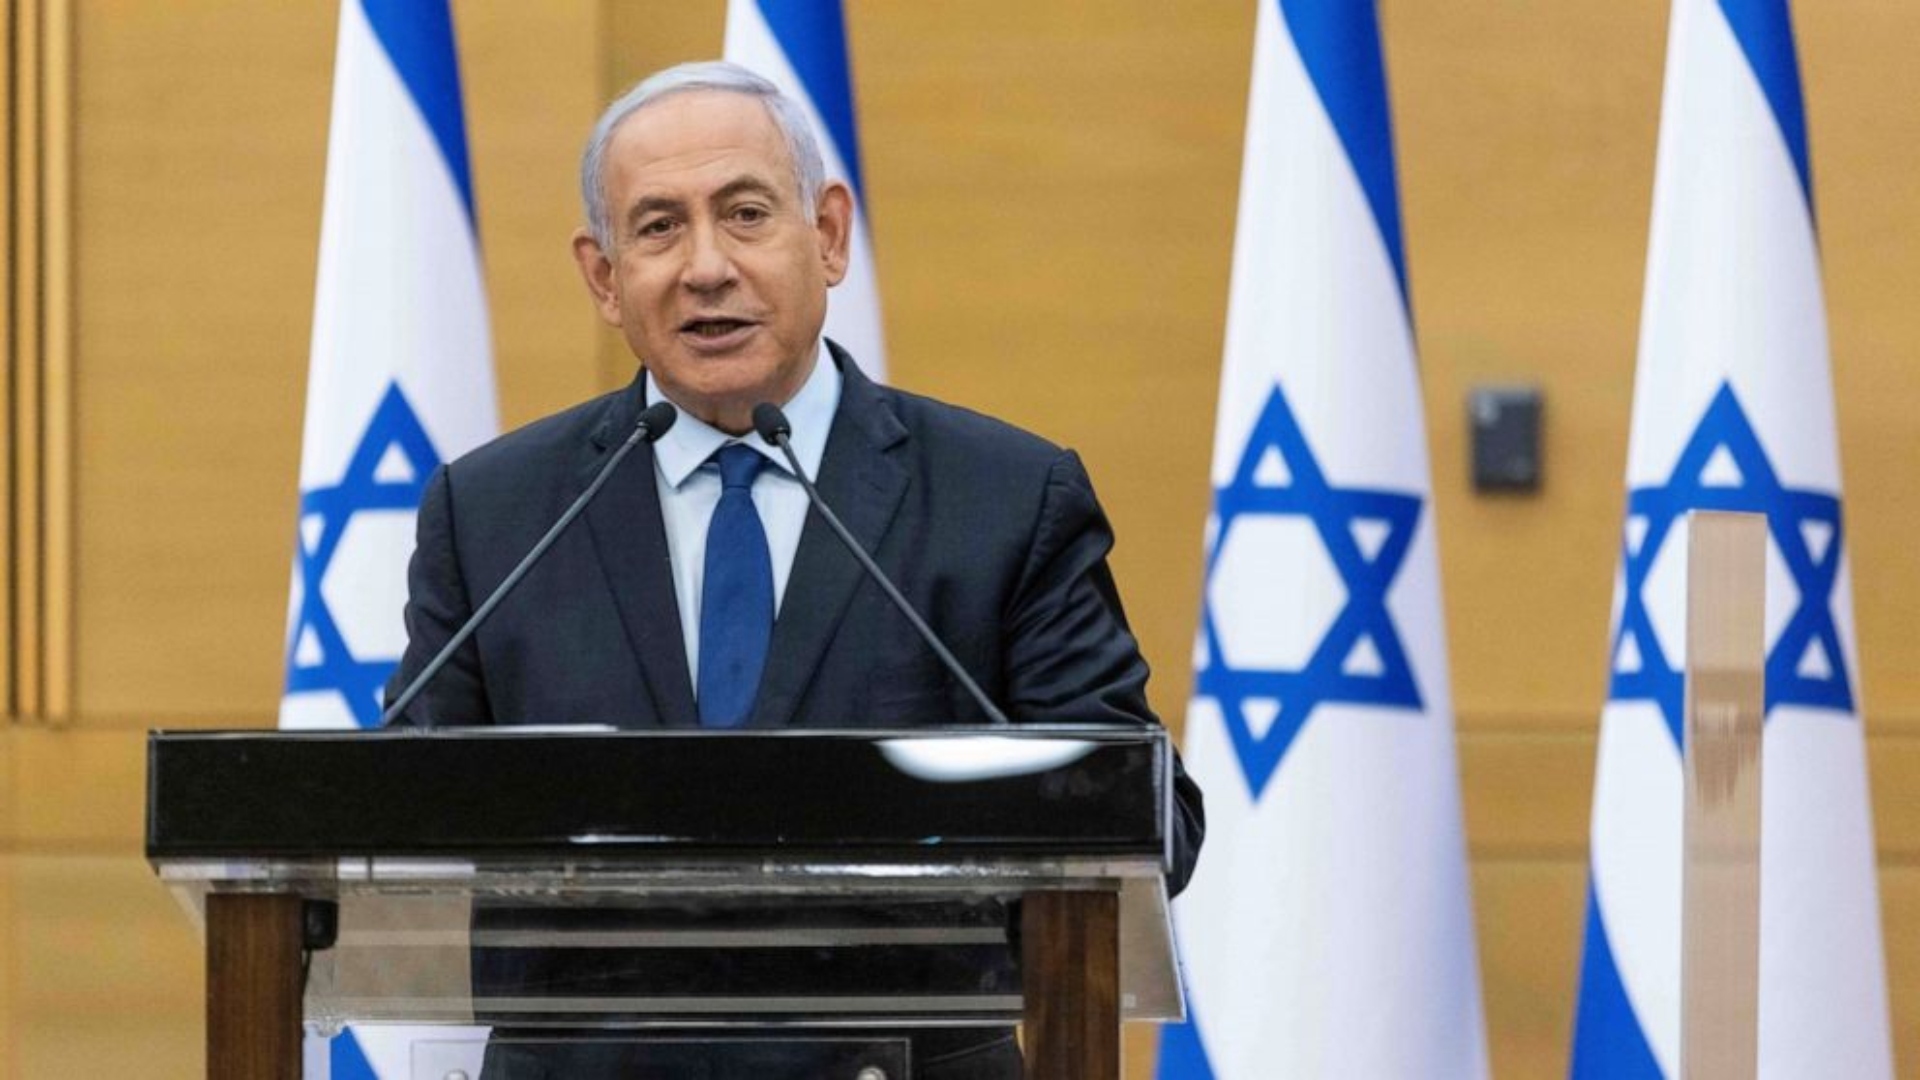 Netanyahu Foes Push For Quick Vote To End His 12 Year Rule Benjamin Netanyahu News Al Jazeera